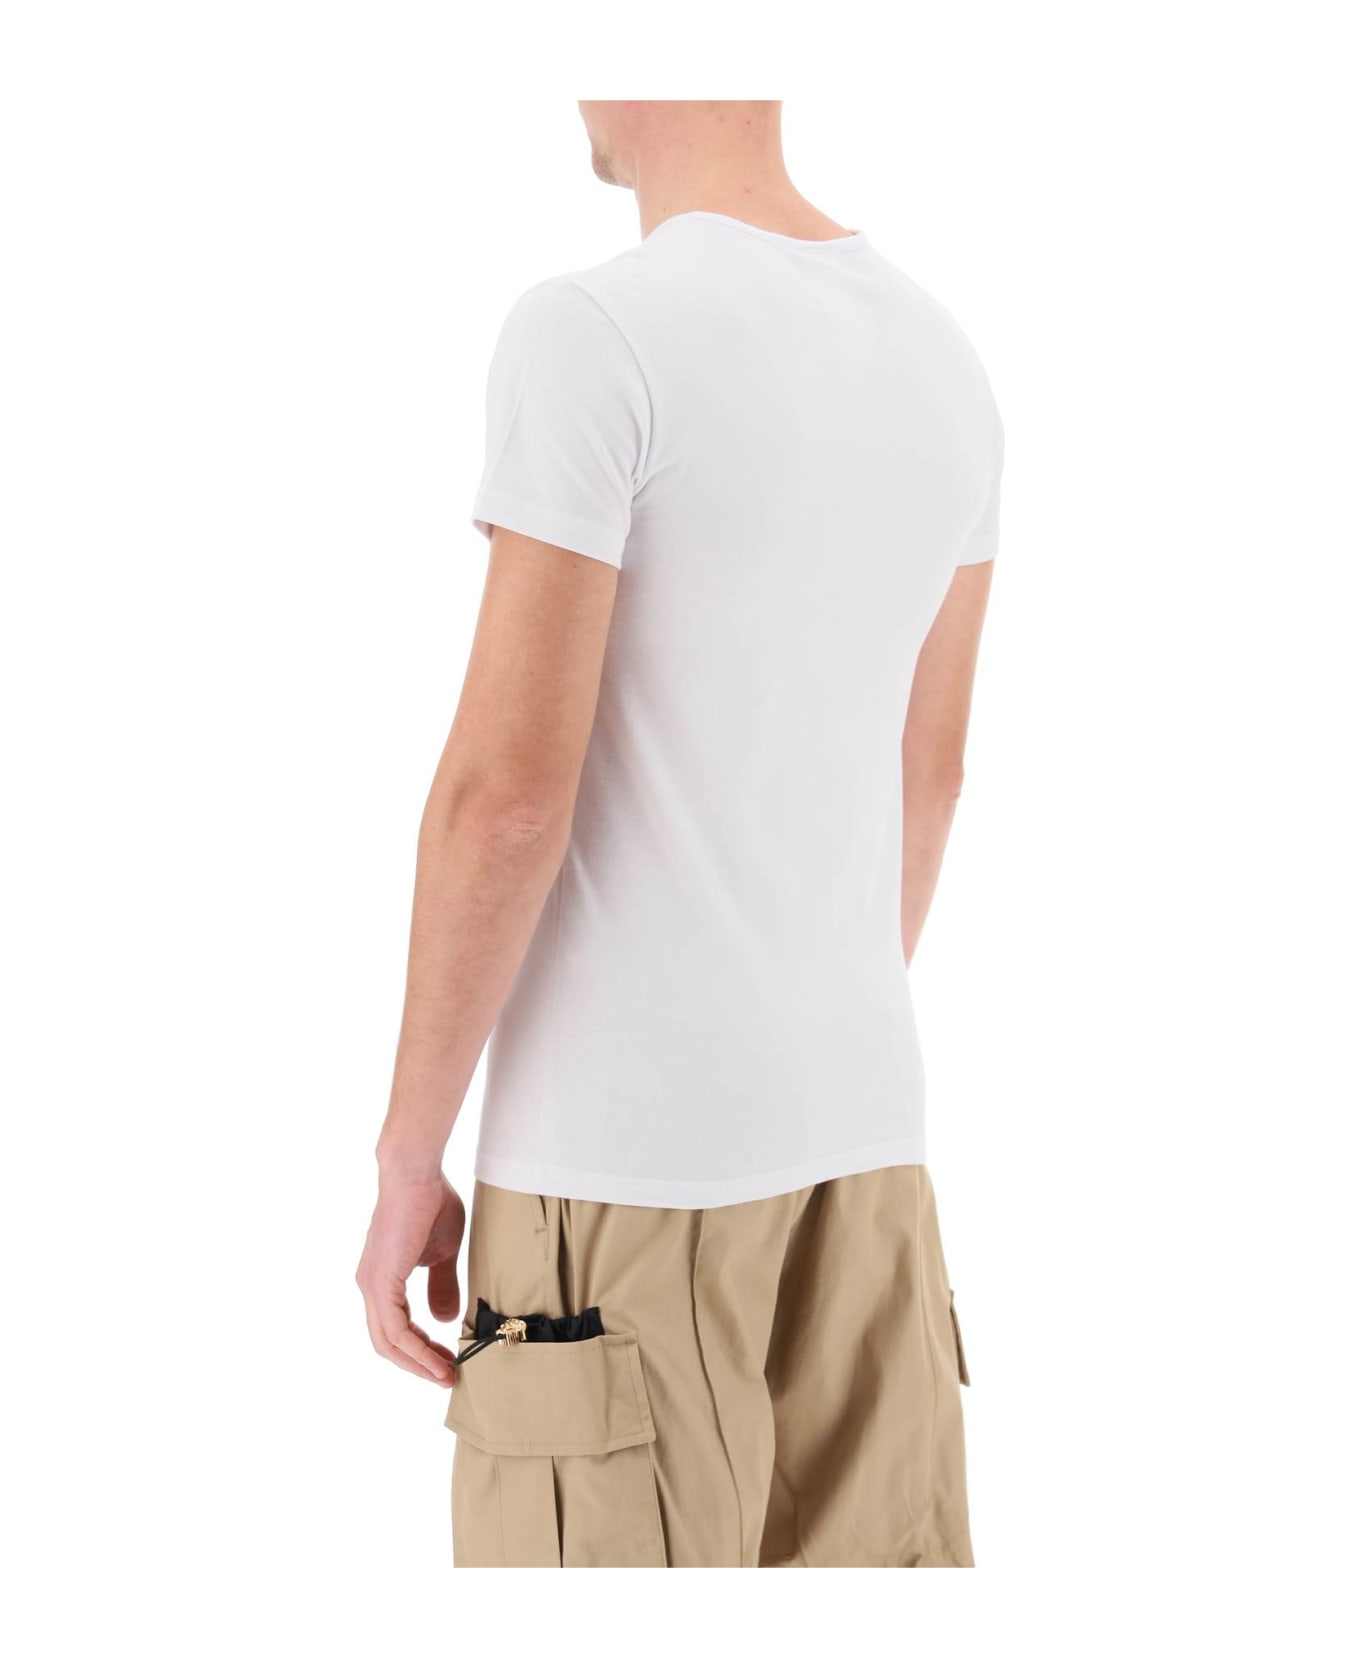 Versace Medusa Underwear T-shirt Bi-pack - Optical white